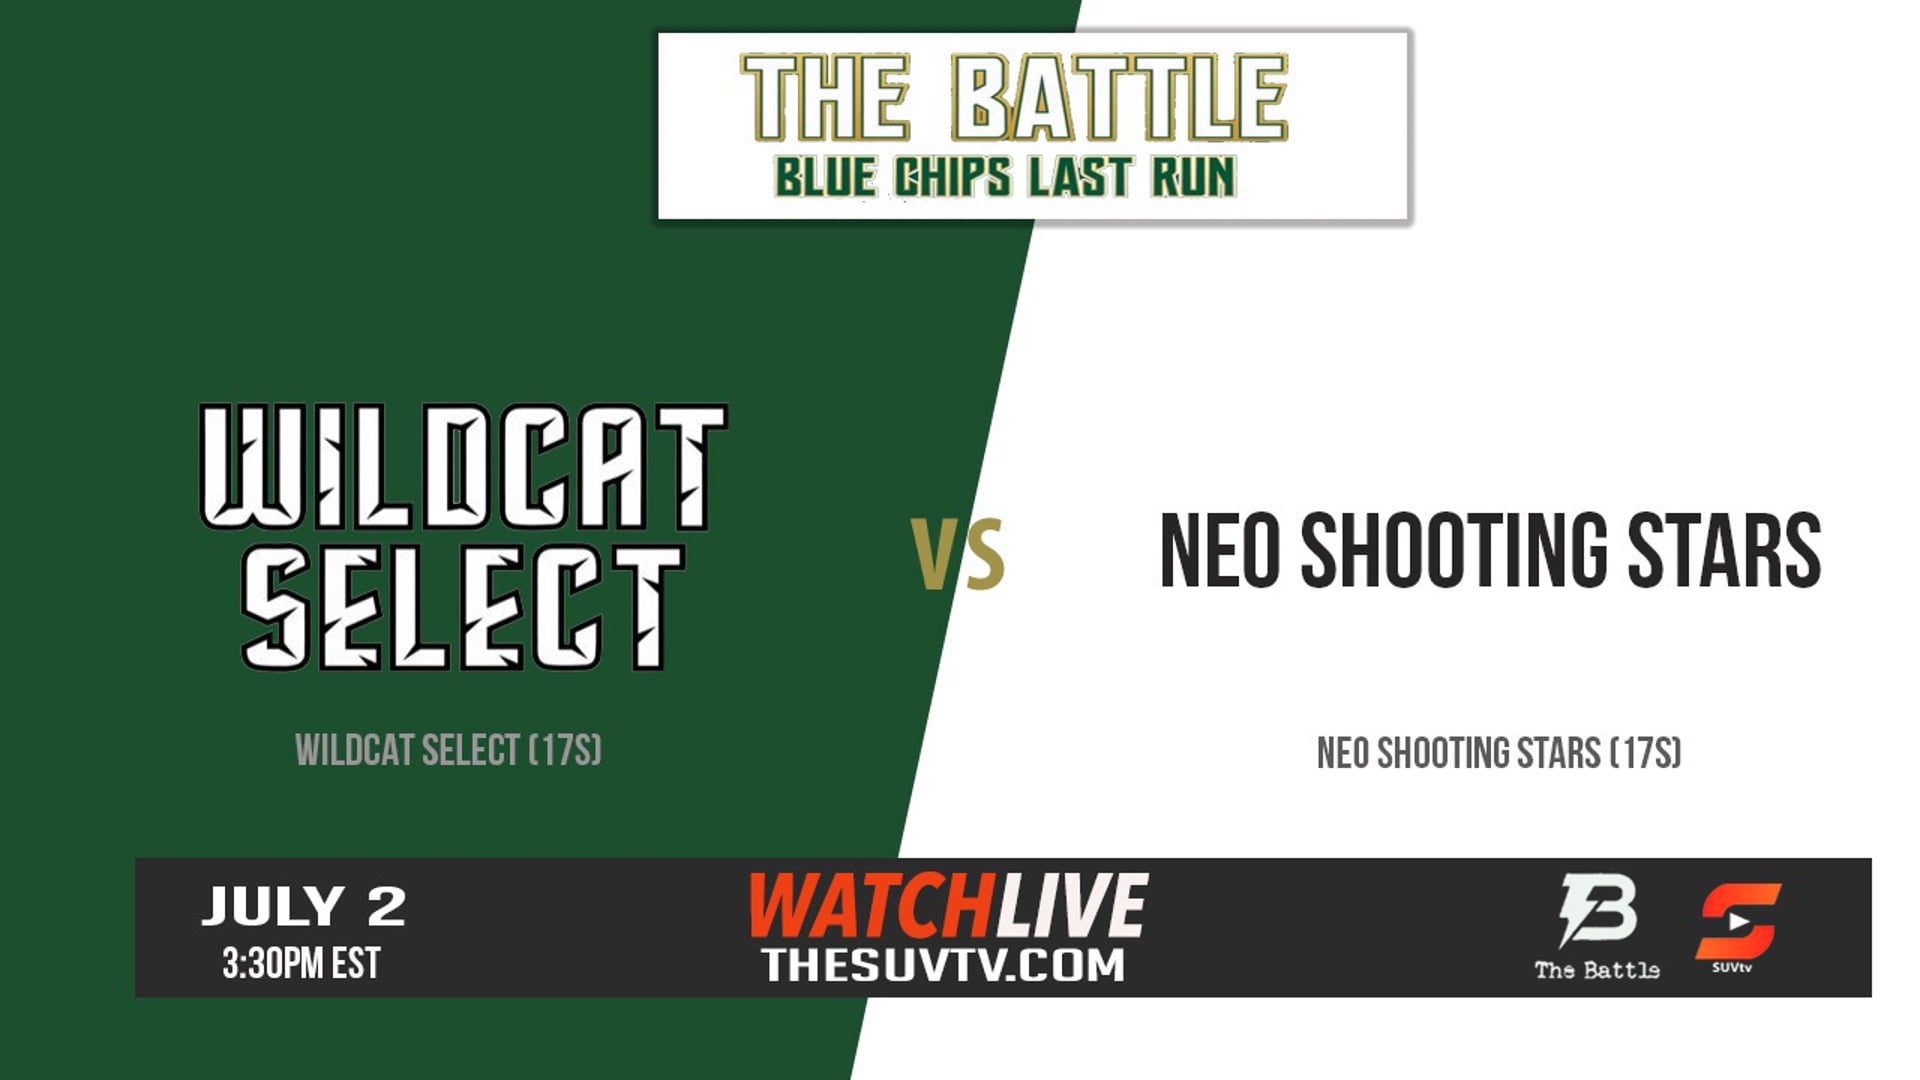 Wildcat Select (17S) vs. Neo Shooting Stars